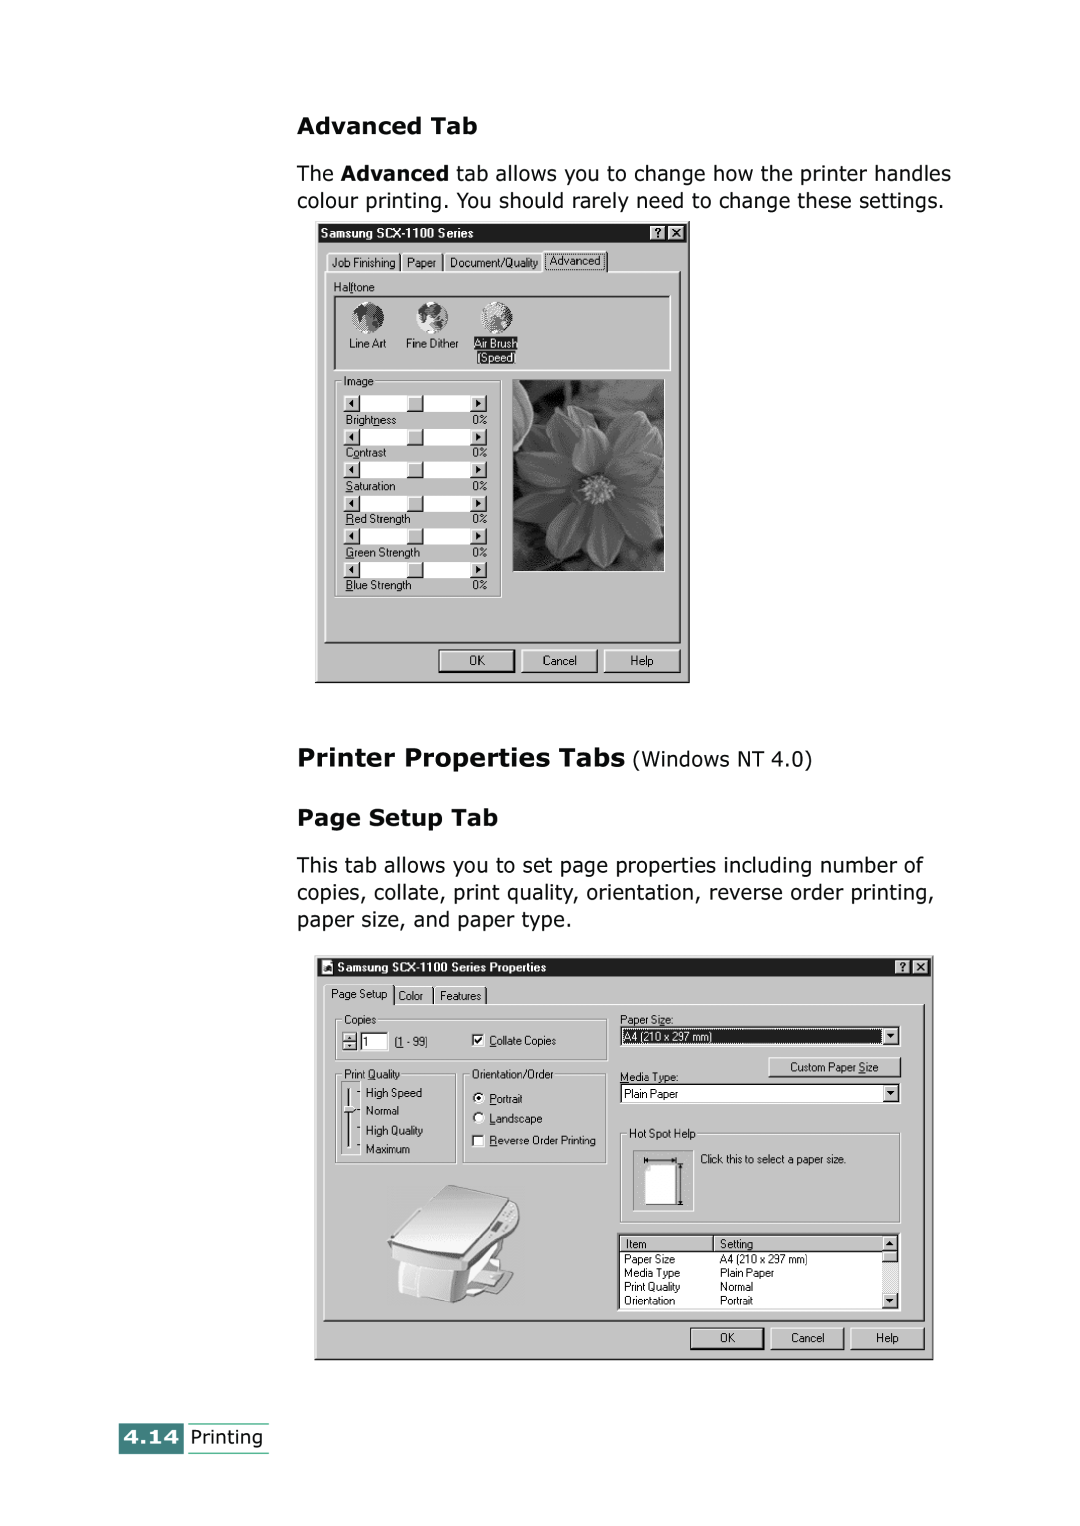 Samsung SCX-1100 manual Printer Properties Tabs Windows NT, Advanced Tab, Page Setup Tab, Printing 